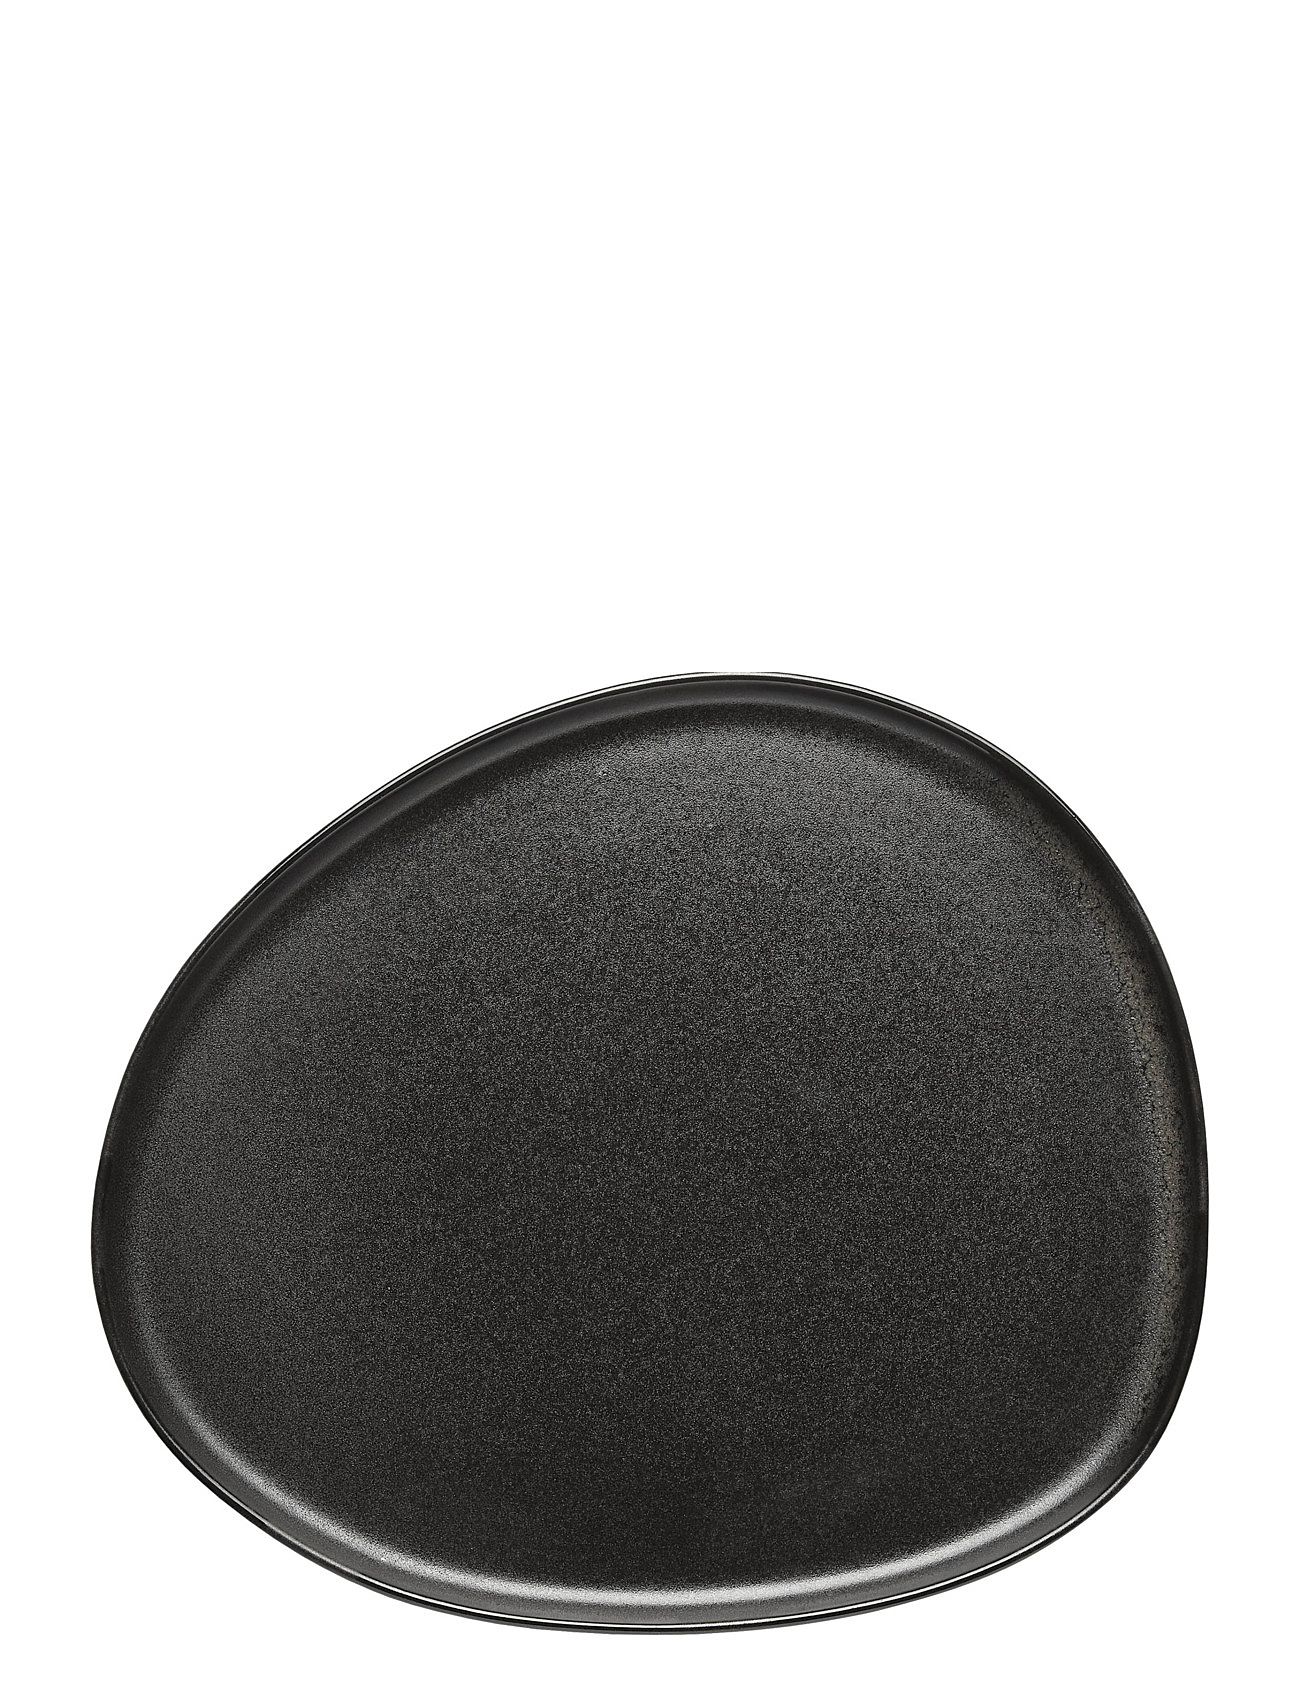 Raw Organic Titanium Black Home Tableware Serving Dishes Serving Platters Black Aida